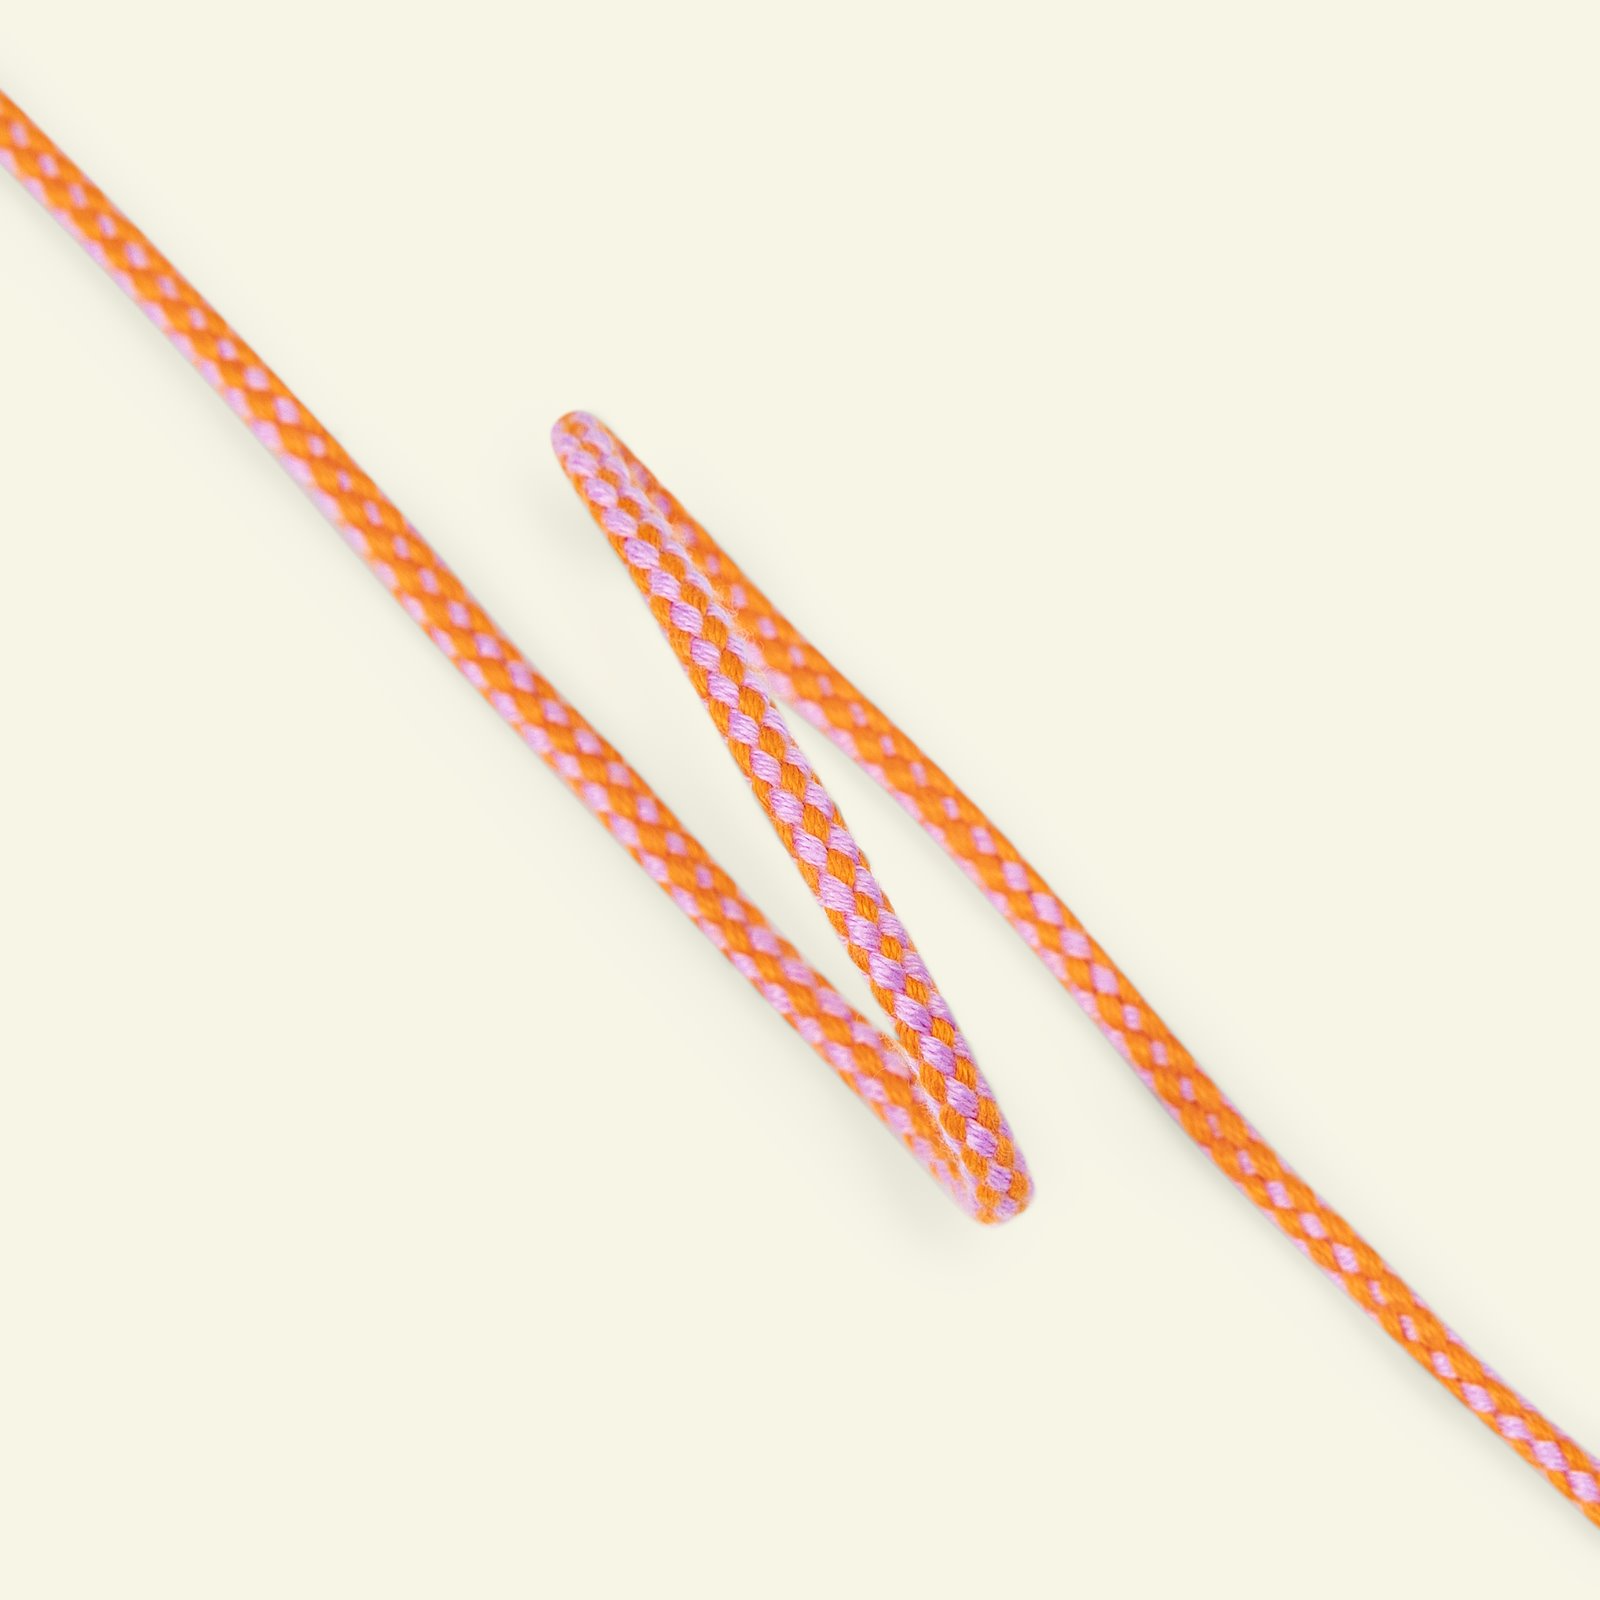 Anorak cord 3,5mm pink/orange 5m 75004_pack